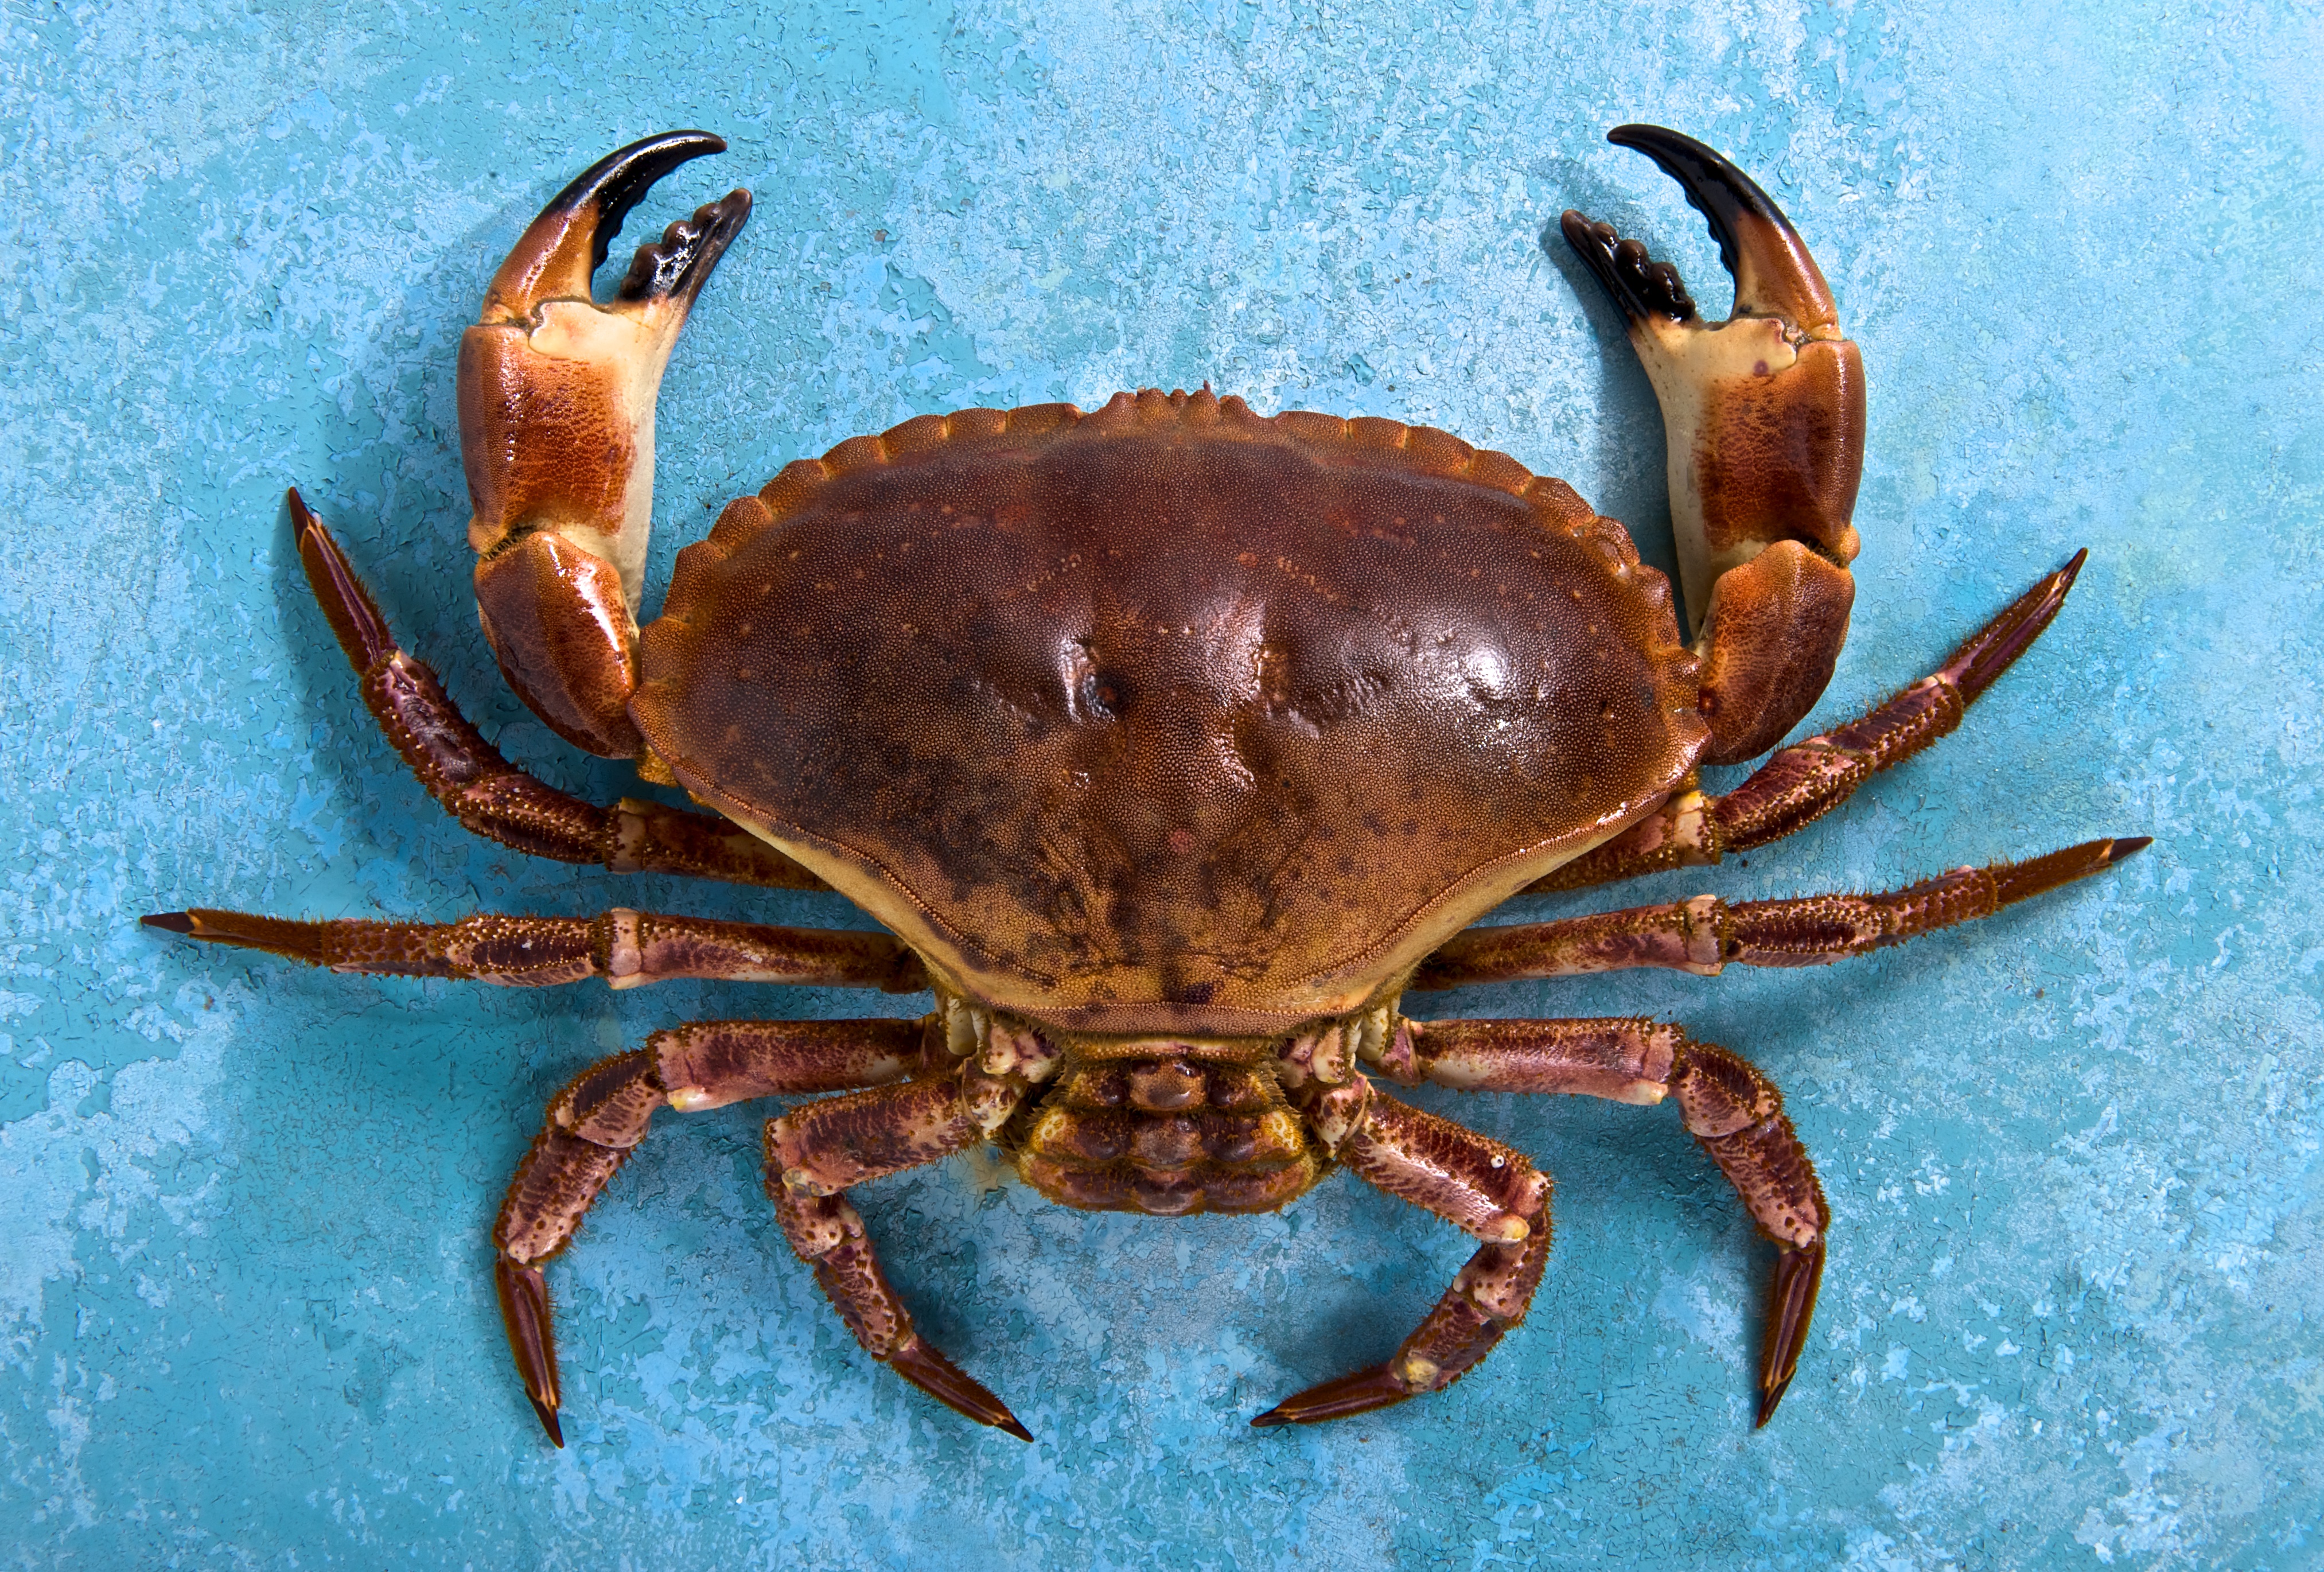 File:Fresh Crab.jpg - Wikimedia Commons